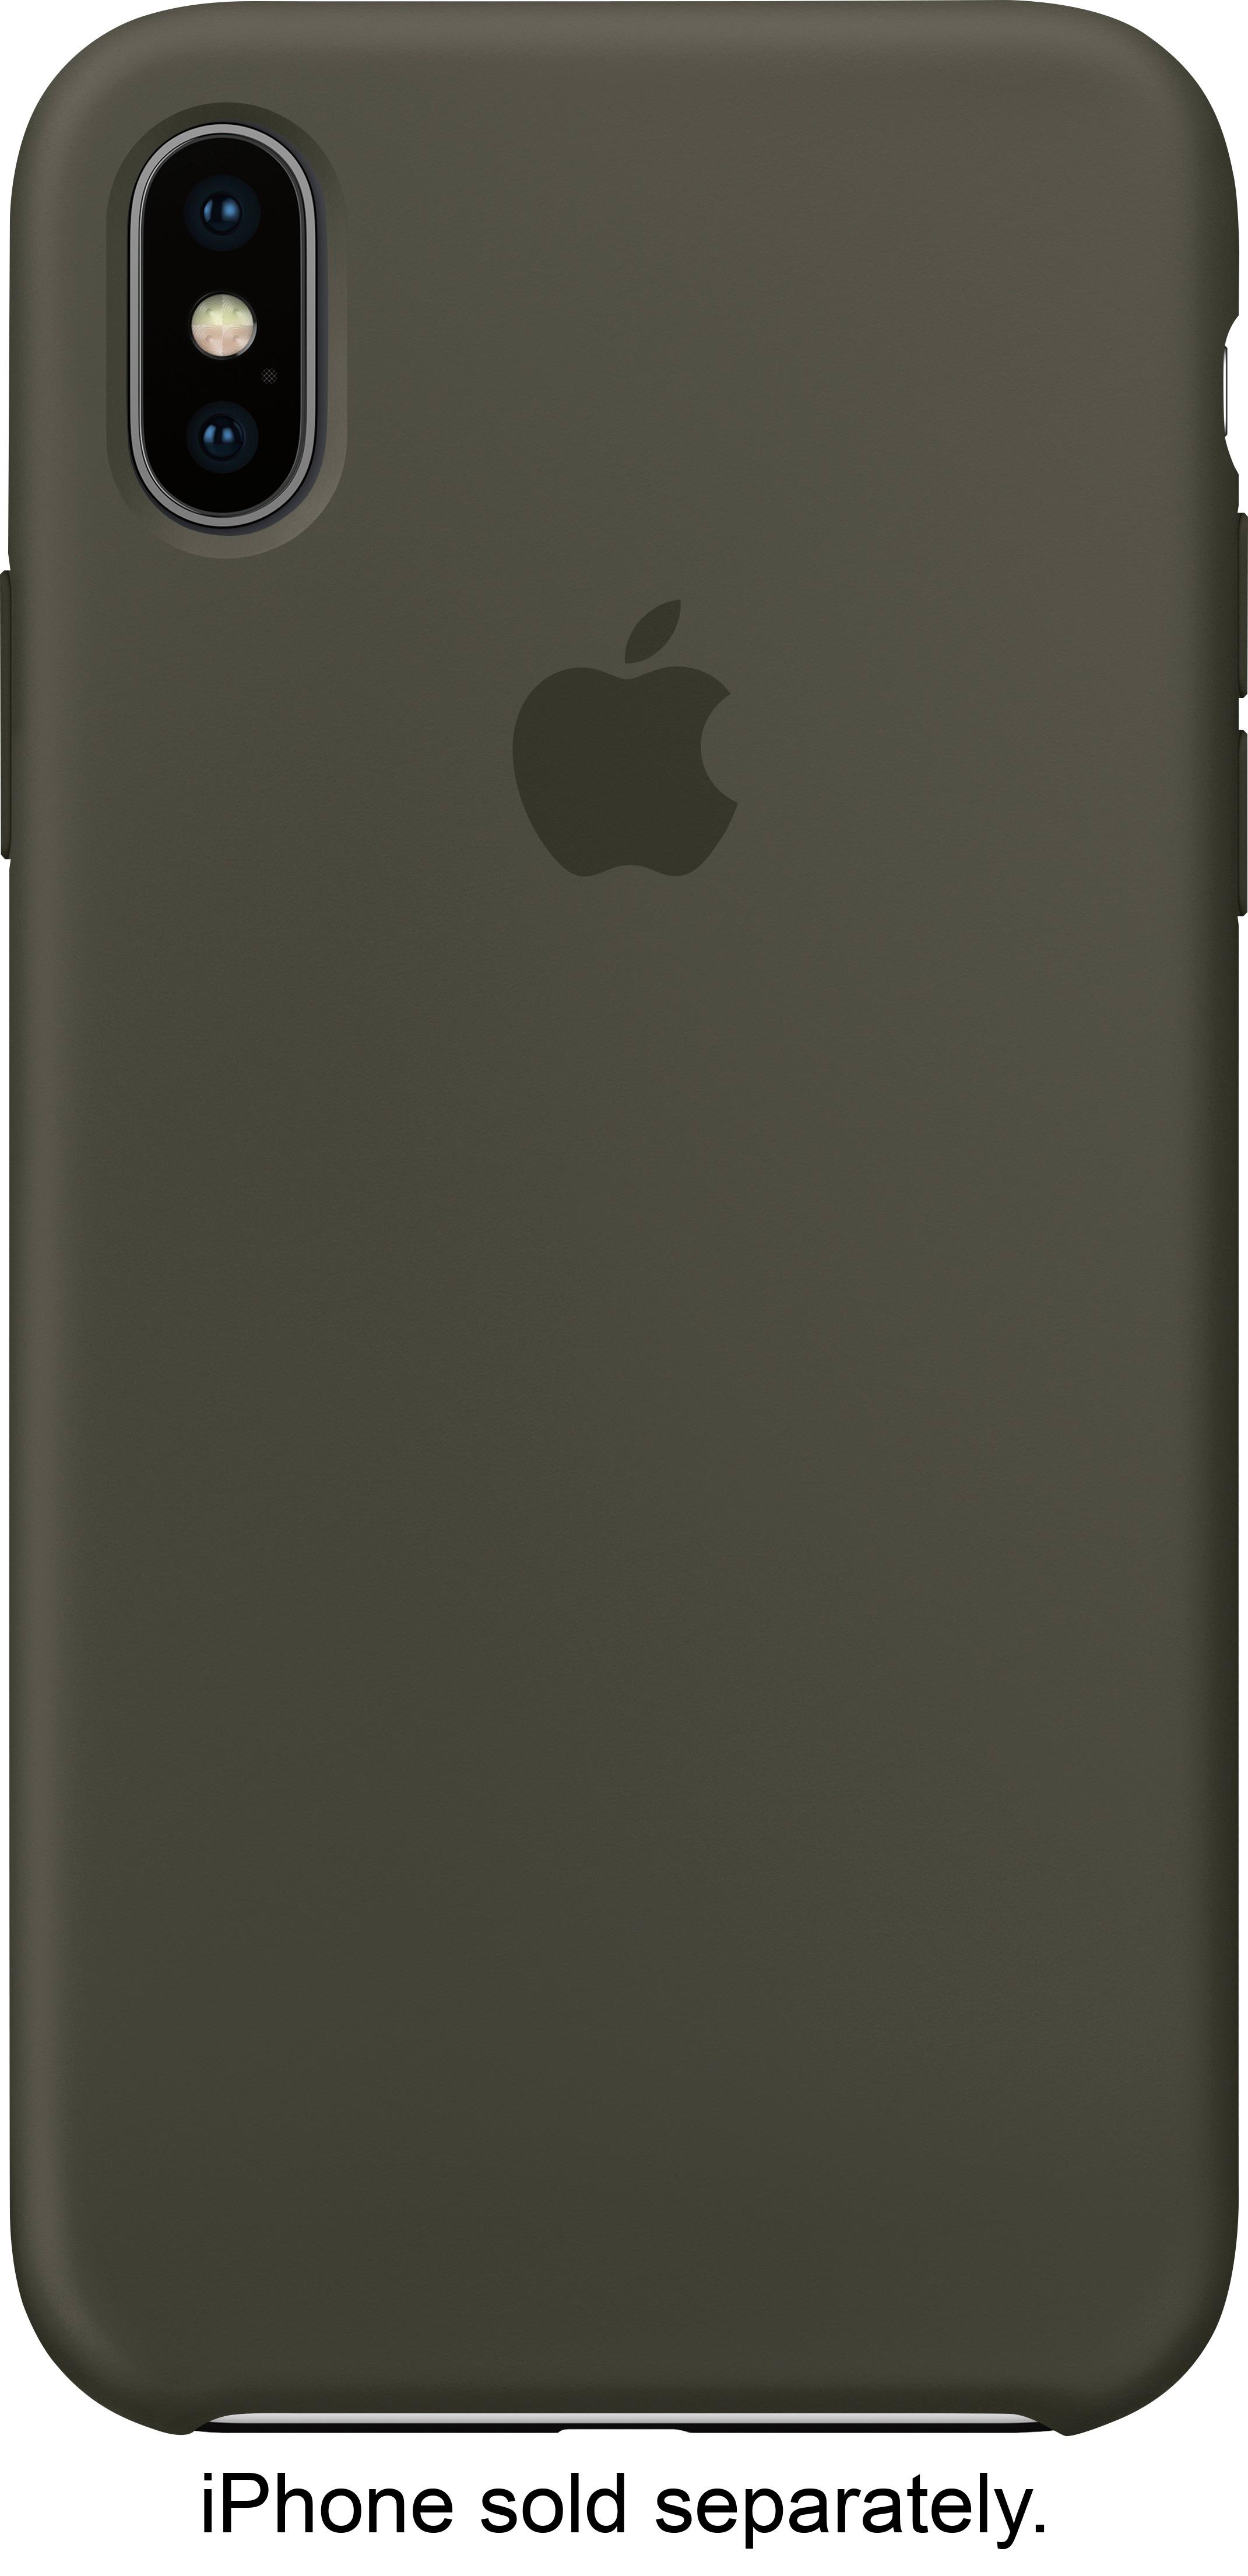 Apple Iphone X Silicone Case Dark Olive Mr522zm A Best Buy